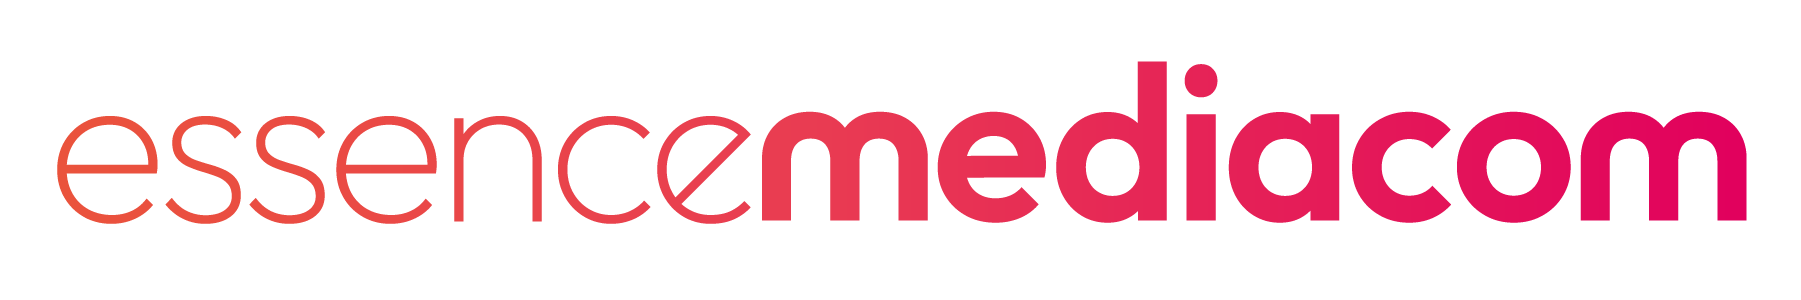 essencemediacom_Logo-Gradient_(002)